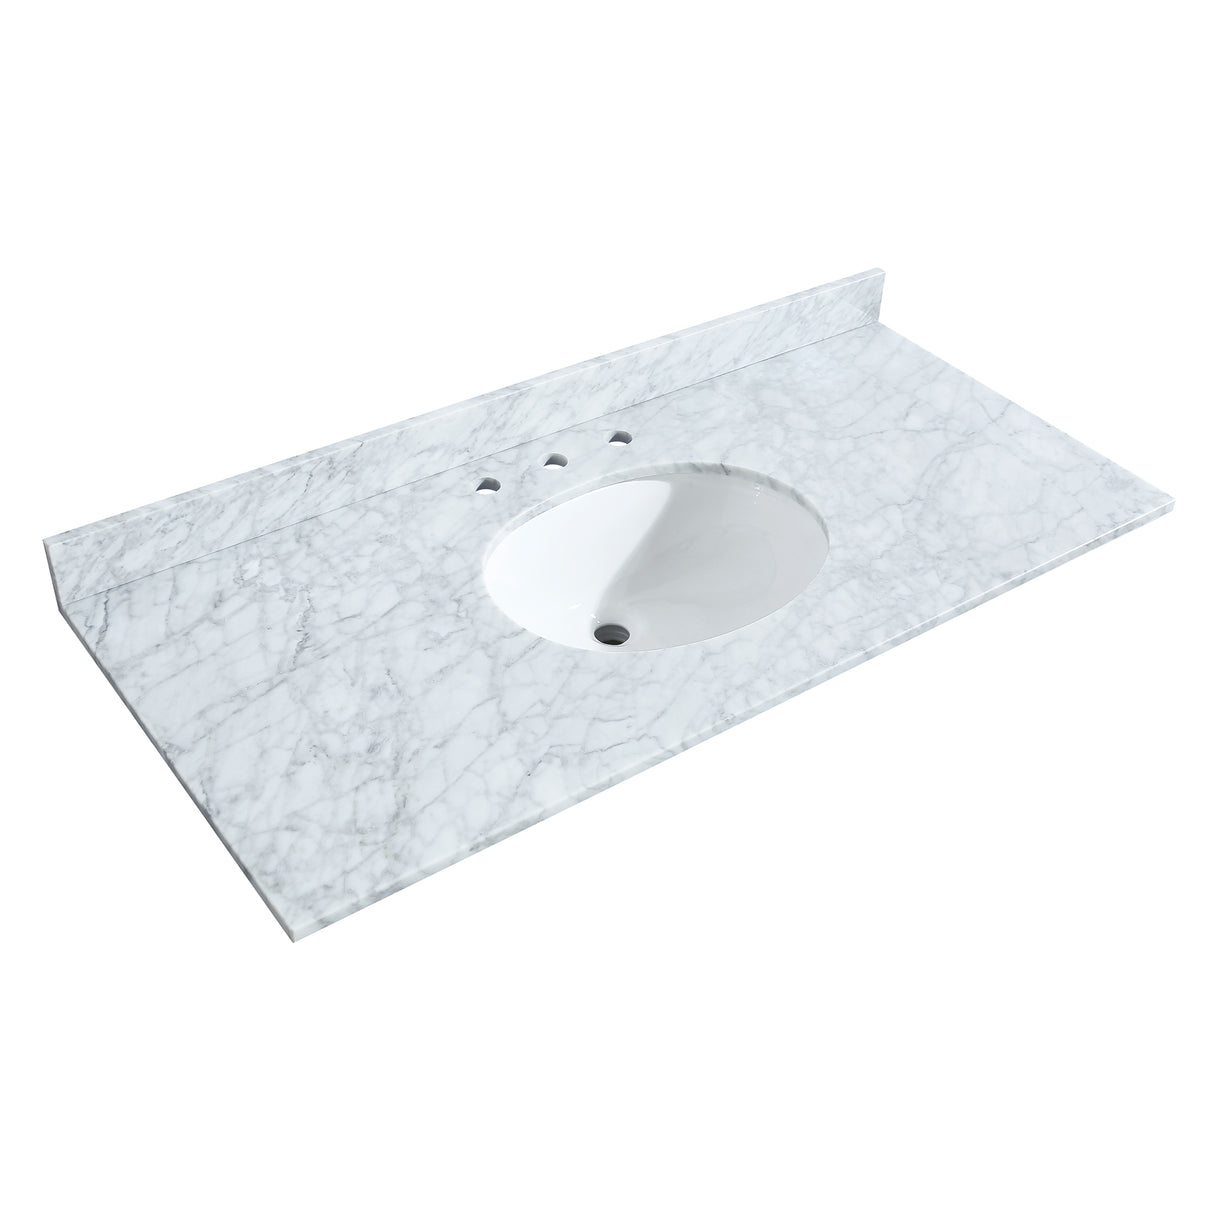 Avery 48 Inch Single Bathroom Vanity in Dark Gray White Carrara Marble Countertop Undermount Oval Sink Matte Black Trim